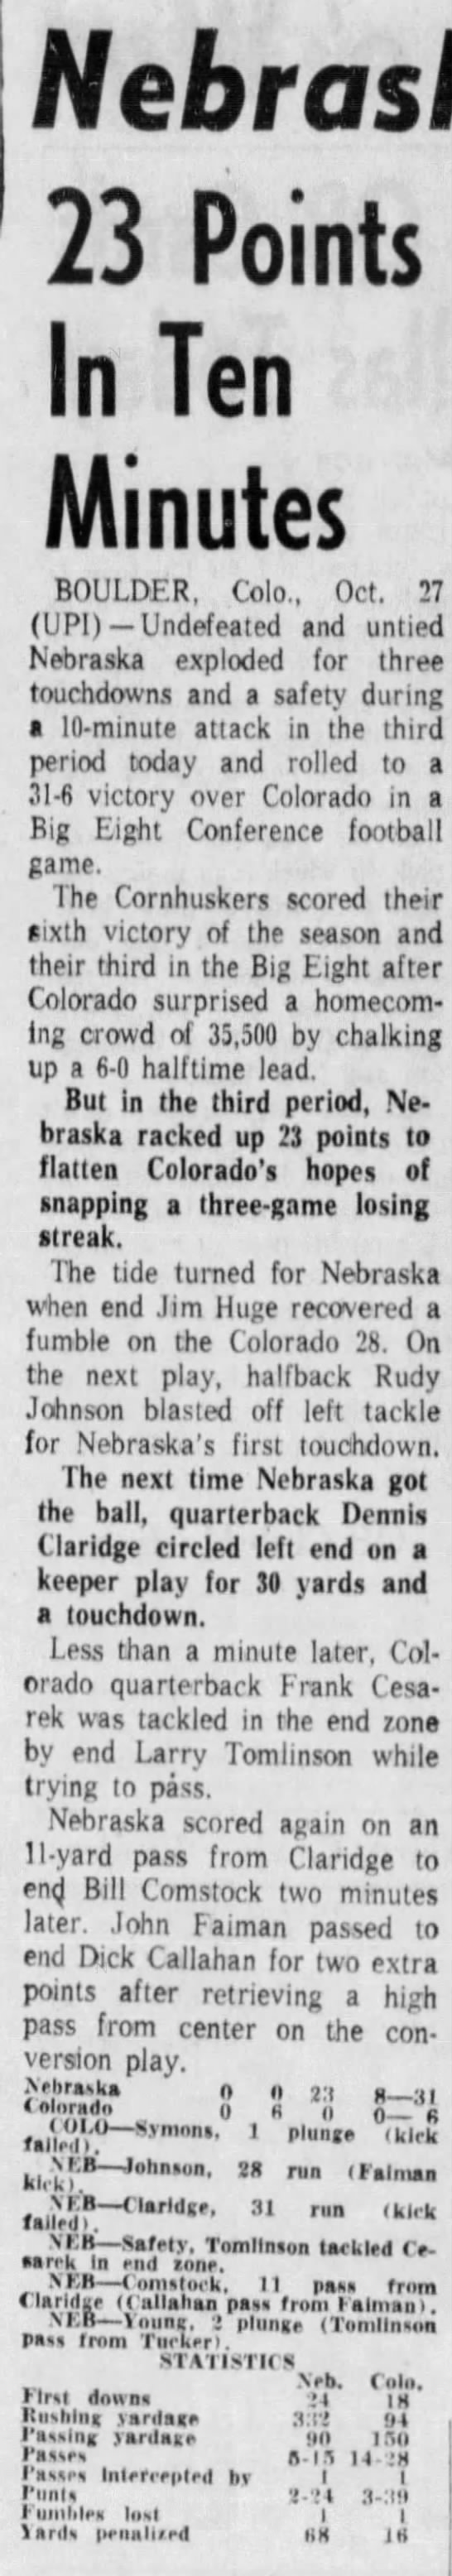 1962 Nebraska-Colorado UPI - 